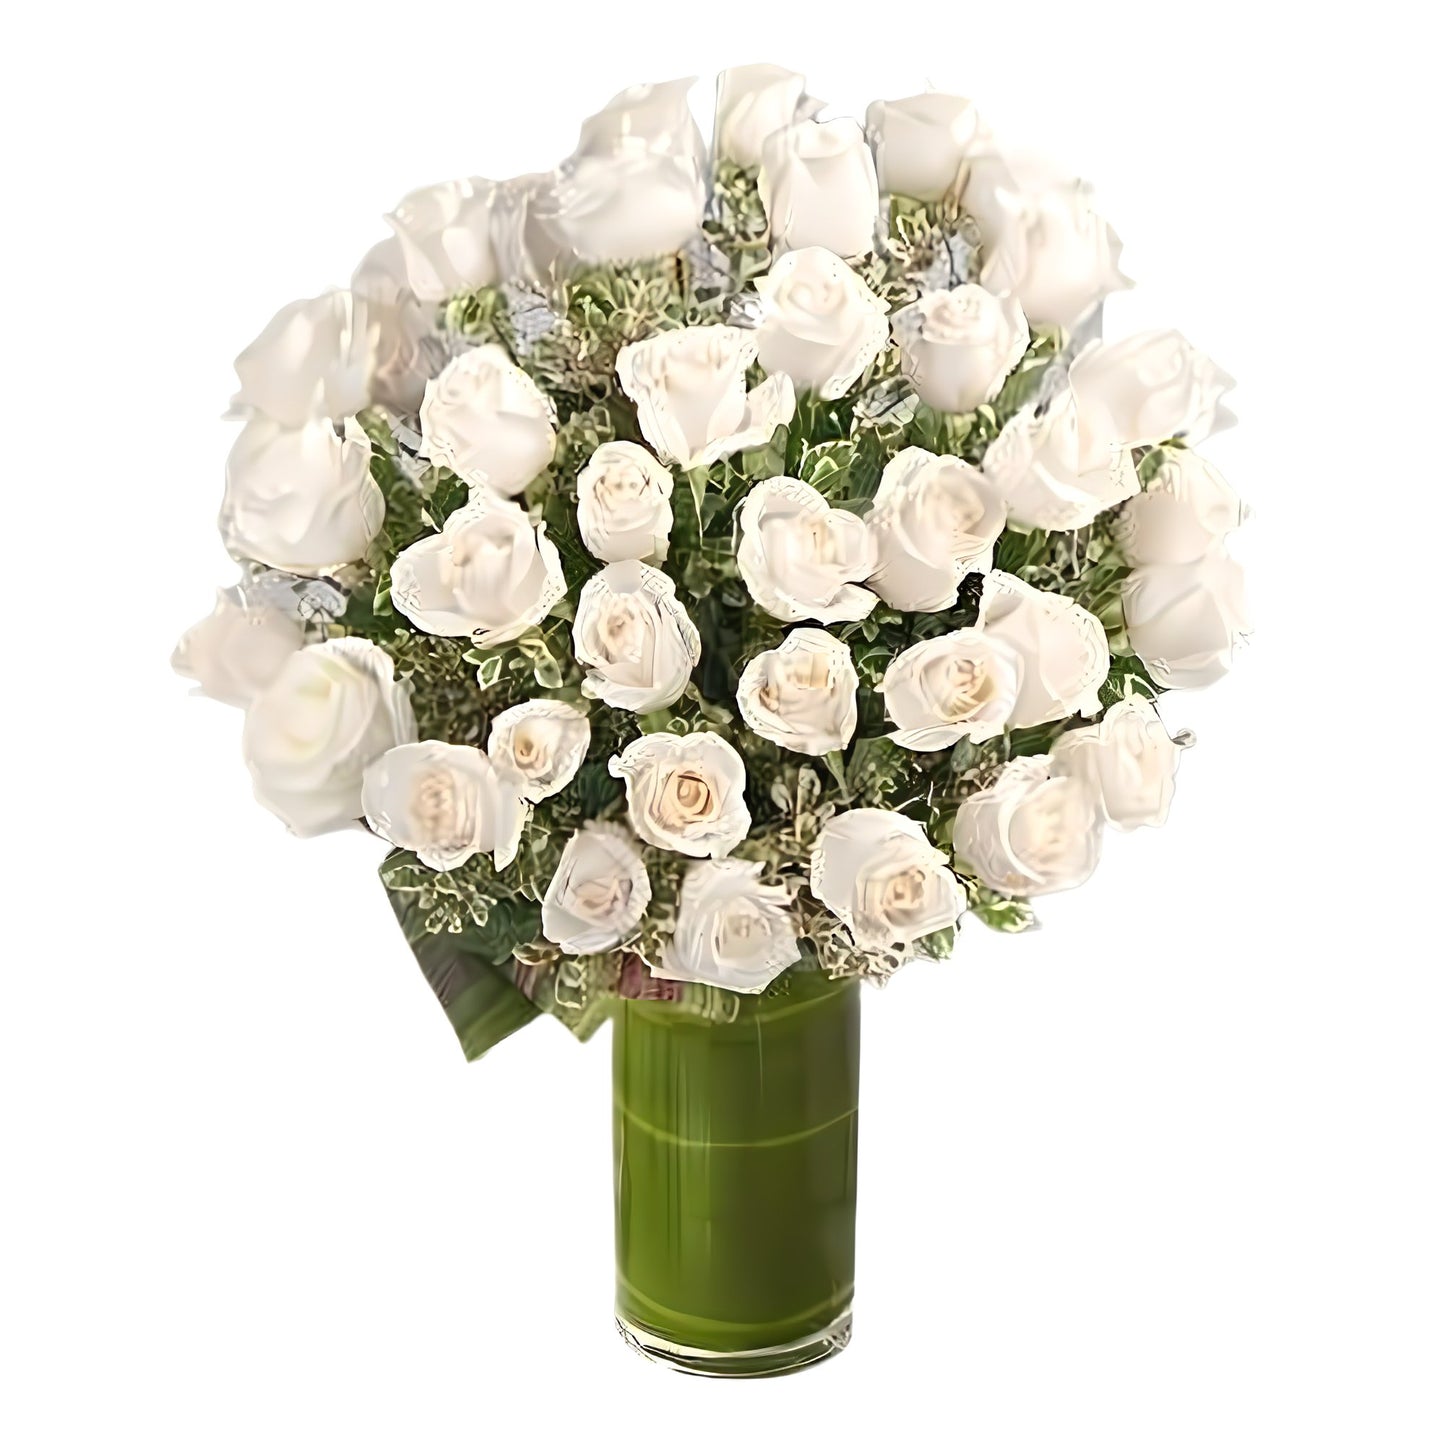 Luxury Rose Bouquet - 48 Premium Long Stem White Roses - Floral Arrangement - Flower Delivery Brooklyn